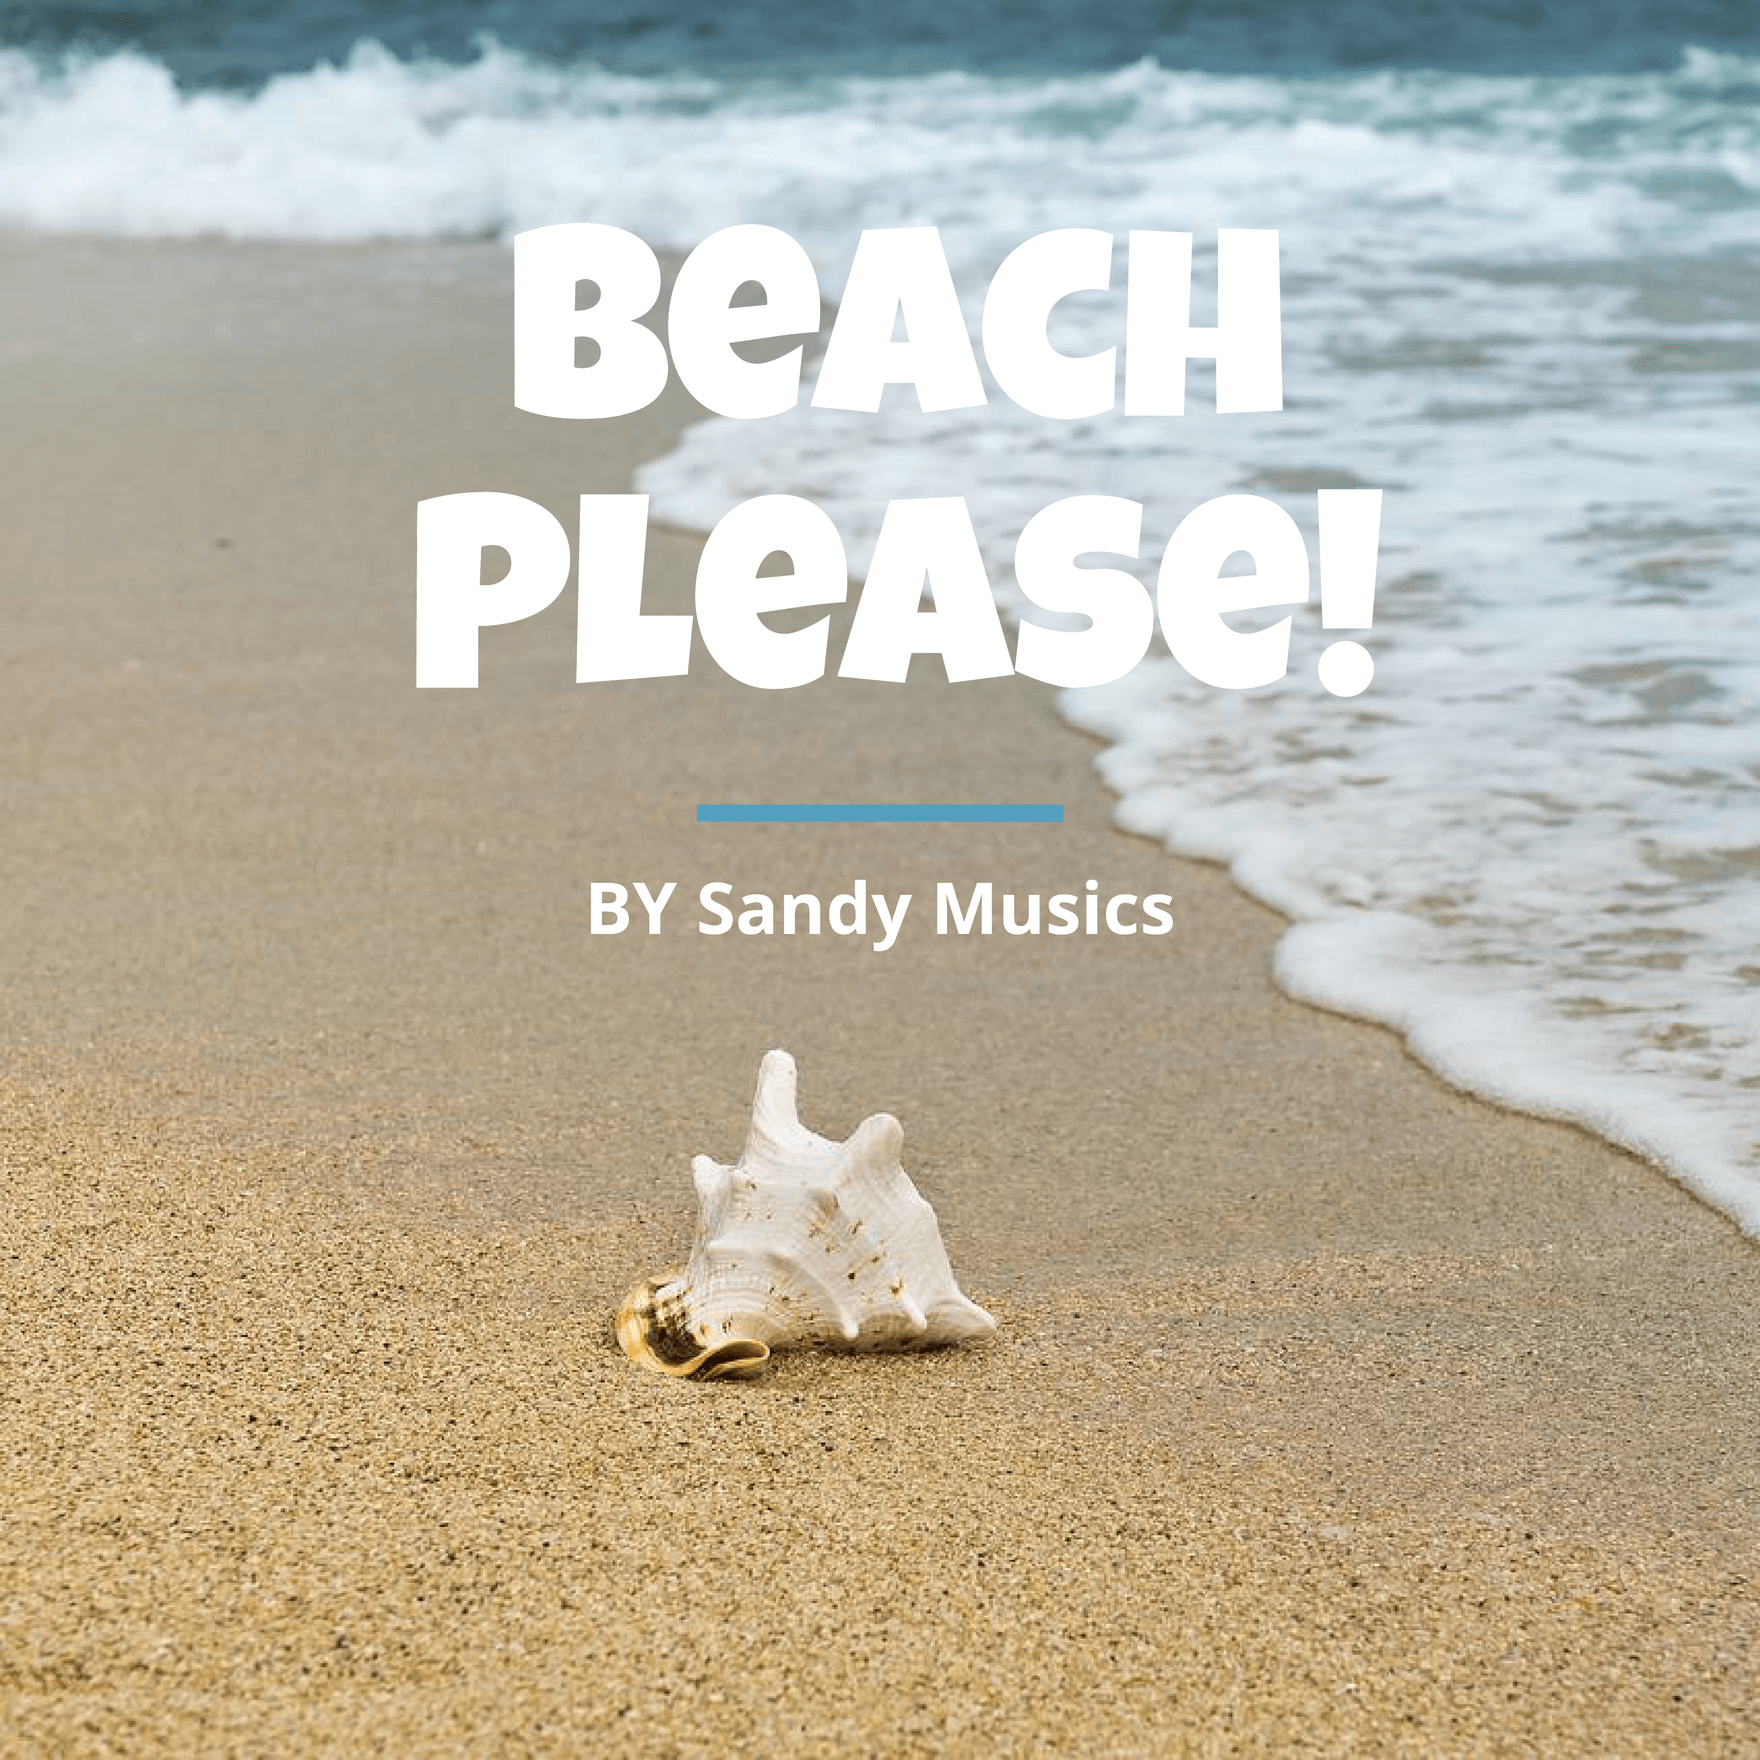 Beach Playlist Cover in Word, Illustrator, PSD